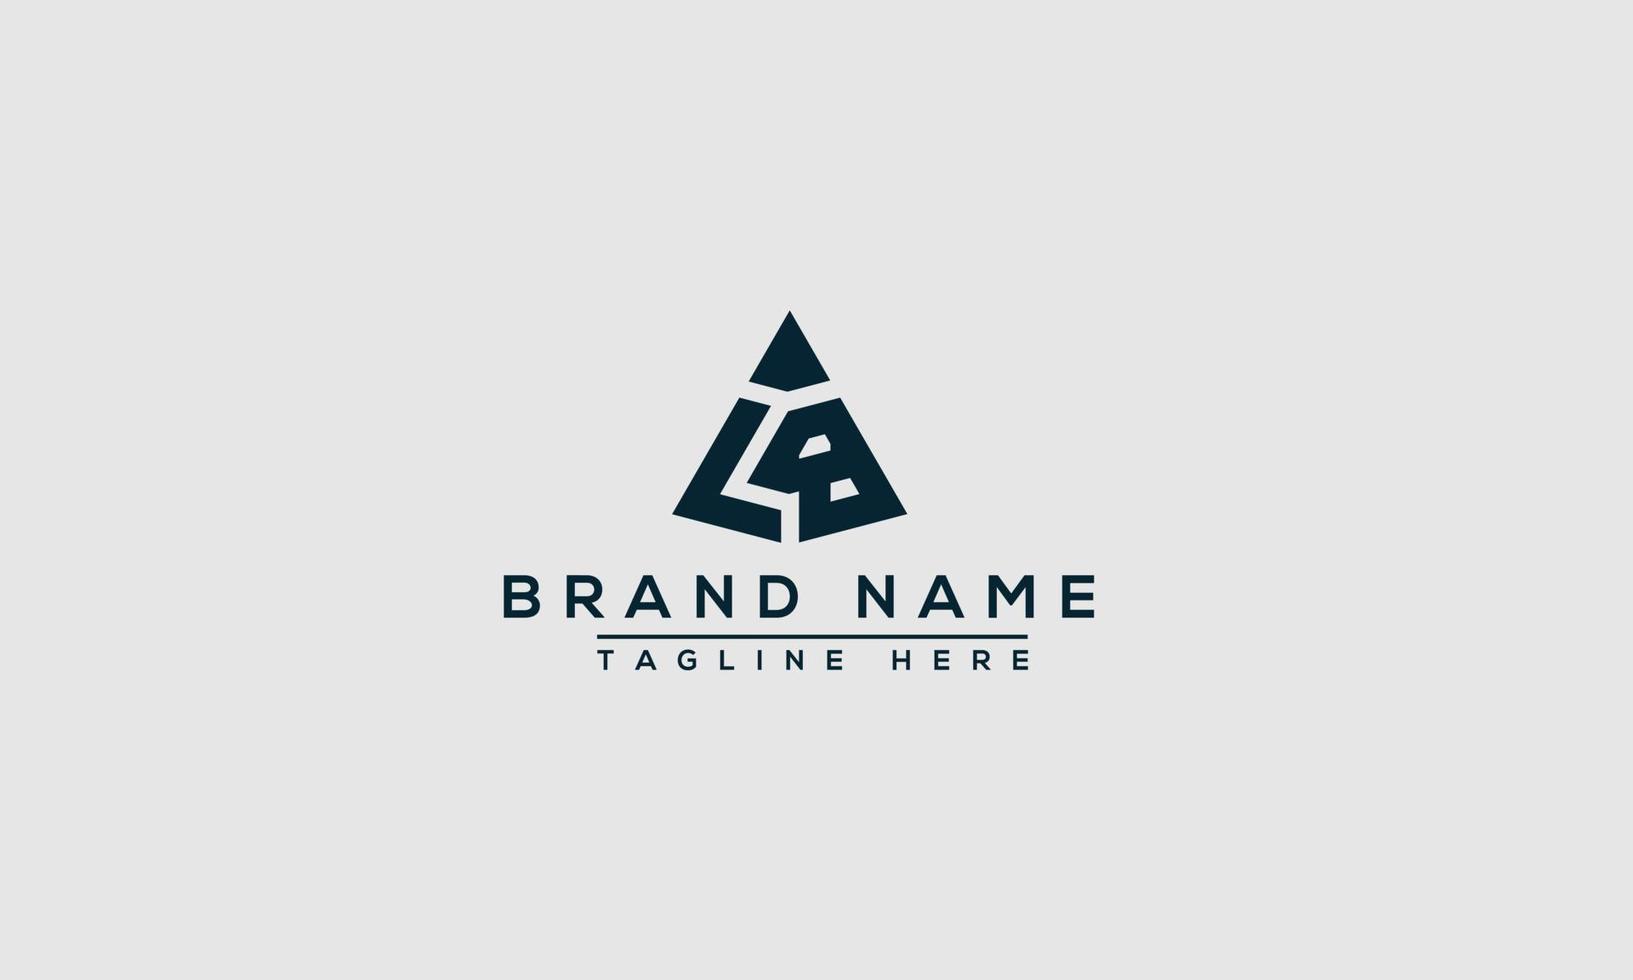 LB Logo Design Template Vector Graphic Branding Element.